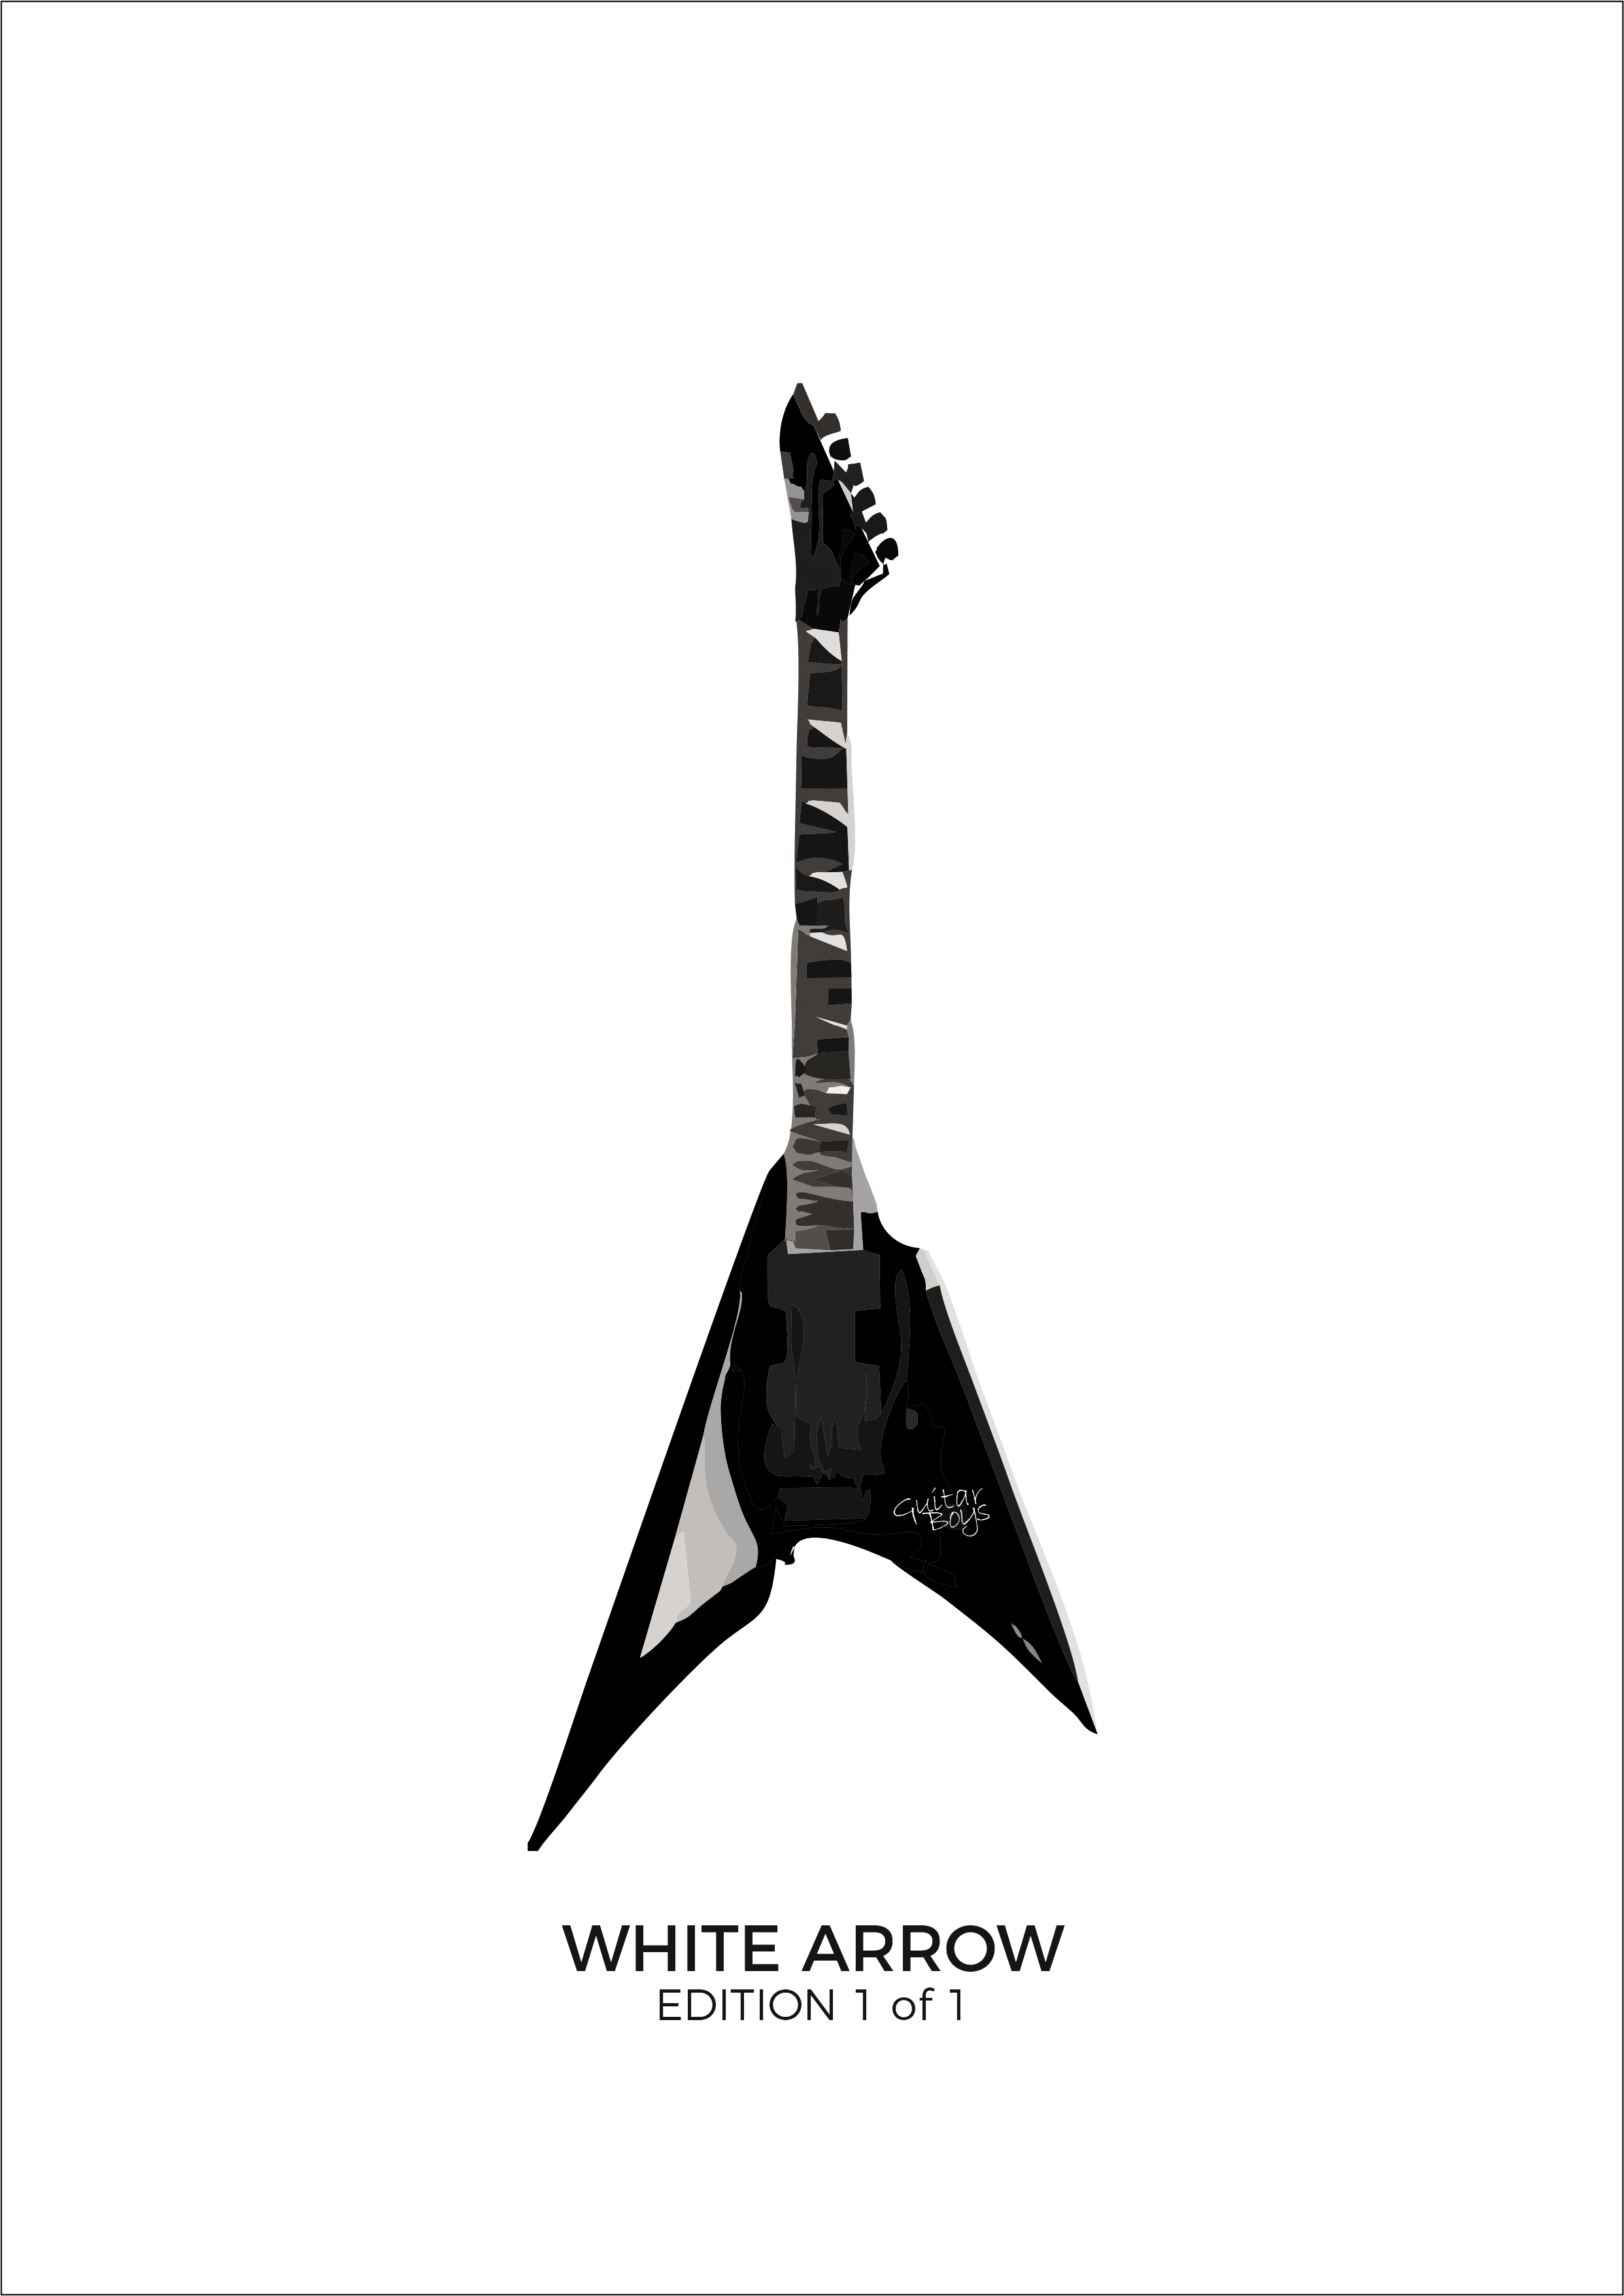 WHITE ARROW - Edition 1 of 1 - Art by Guitar Boys // 2021